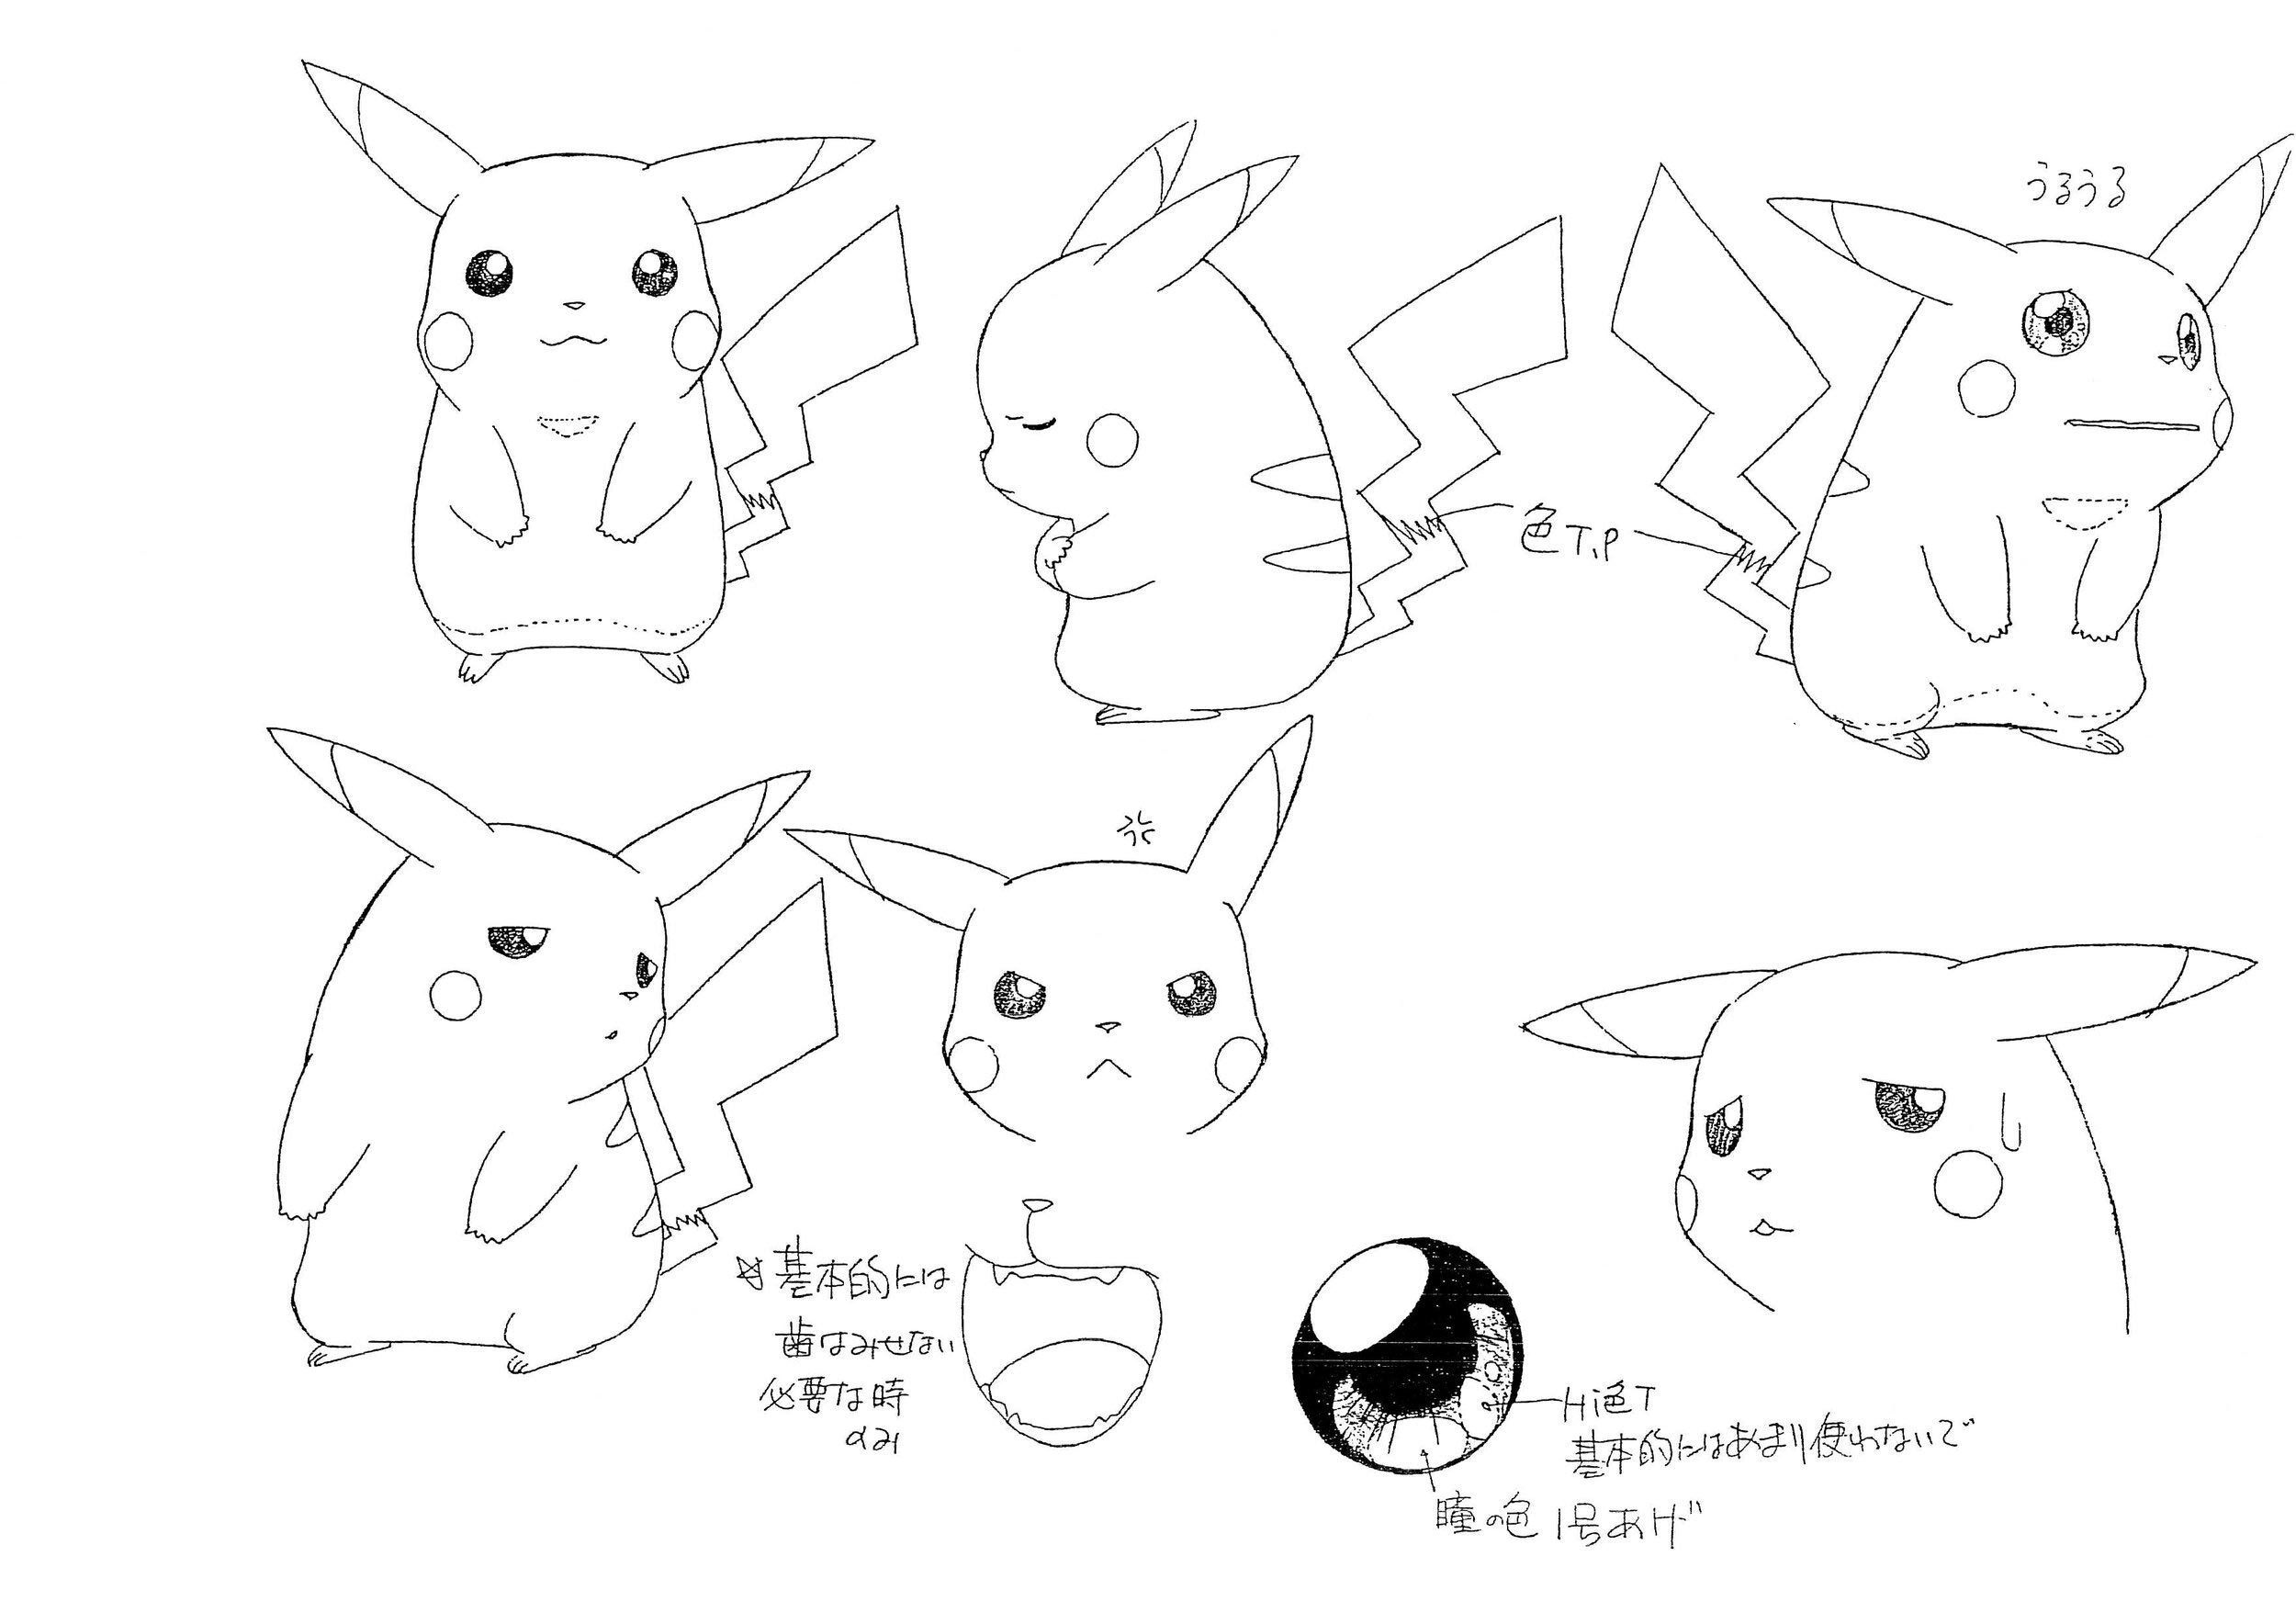 Pikachu drawing reference